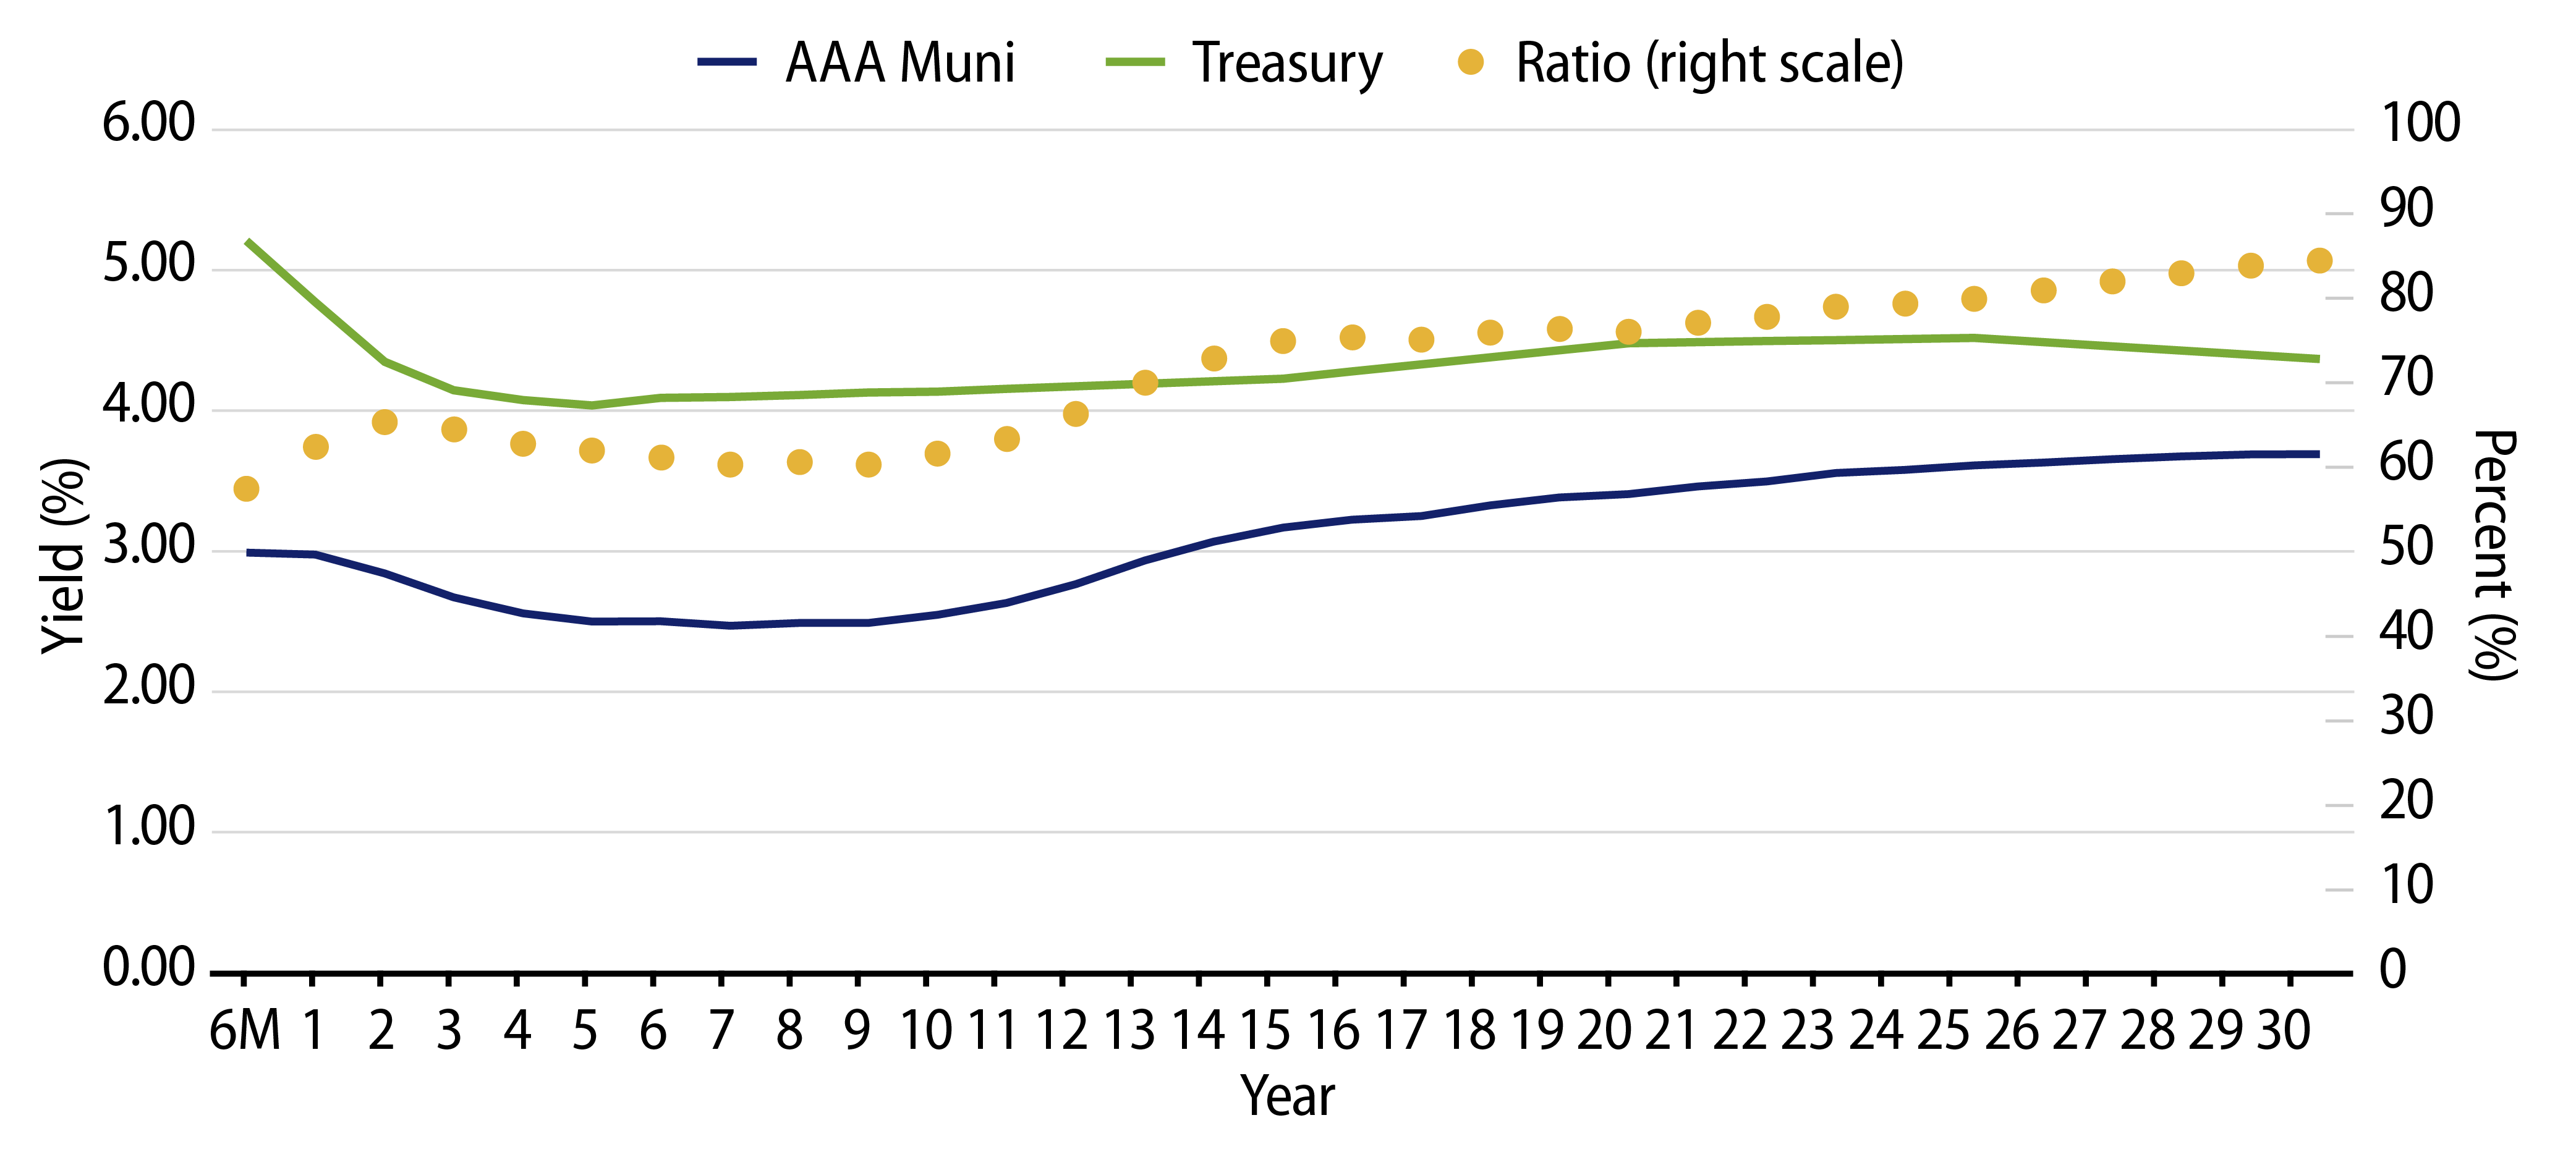 AAA Municipal vs. Treasury Yield Curves 